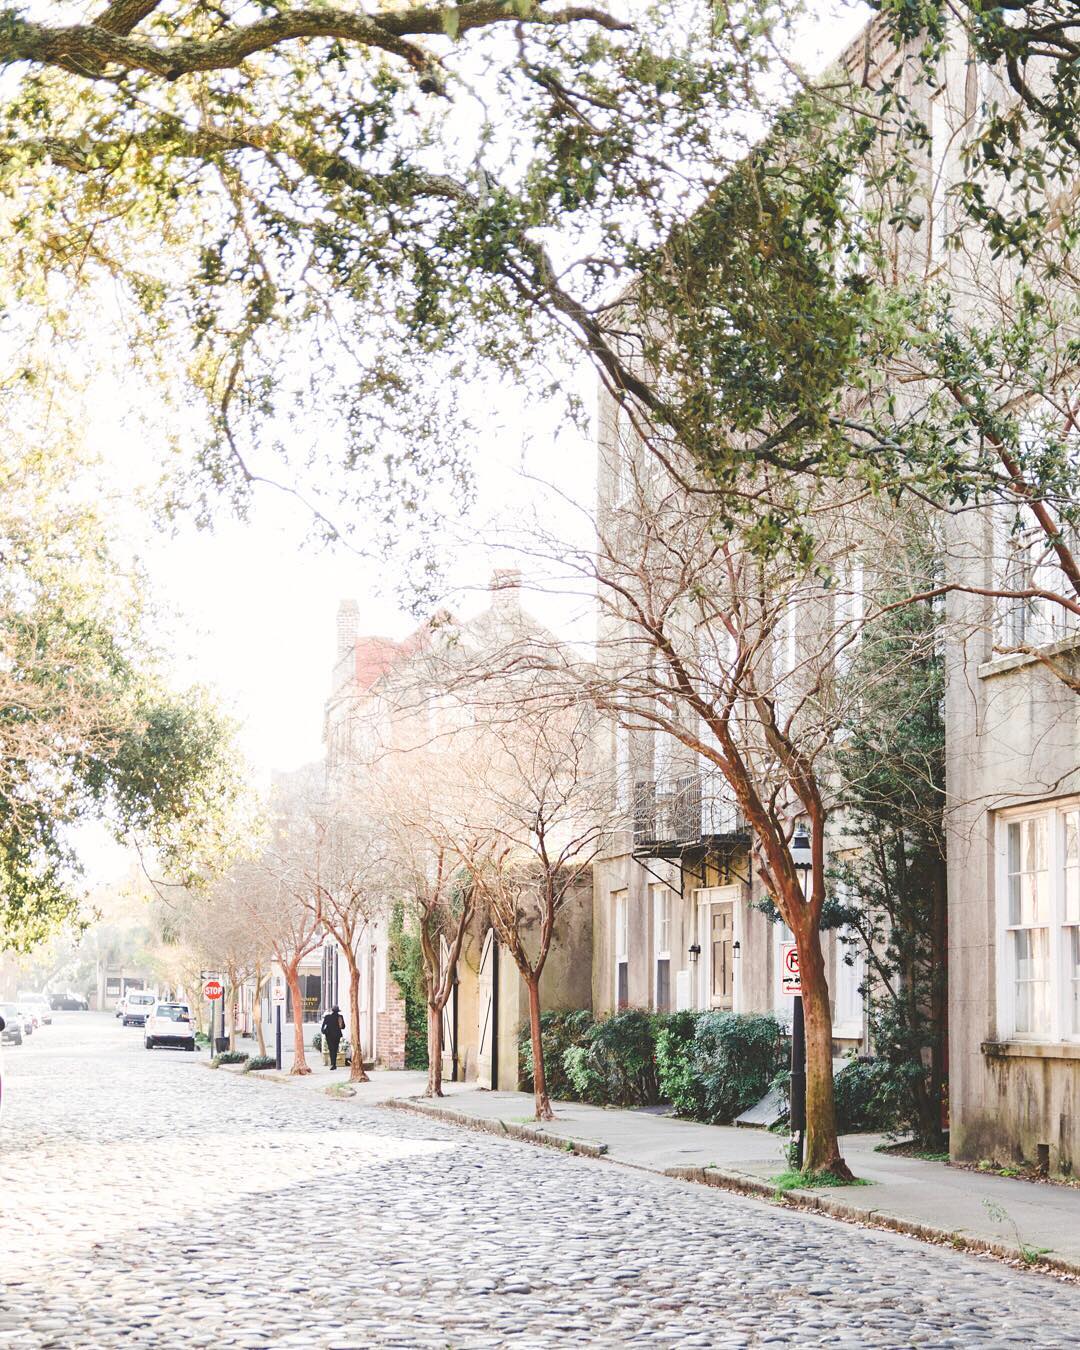 Cobblestone street shaded by trees in Charleston, SC. Photo by Instagram user @elizabethrosemessina